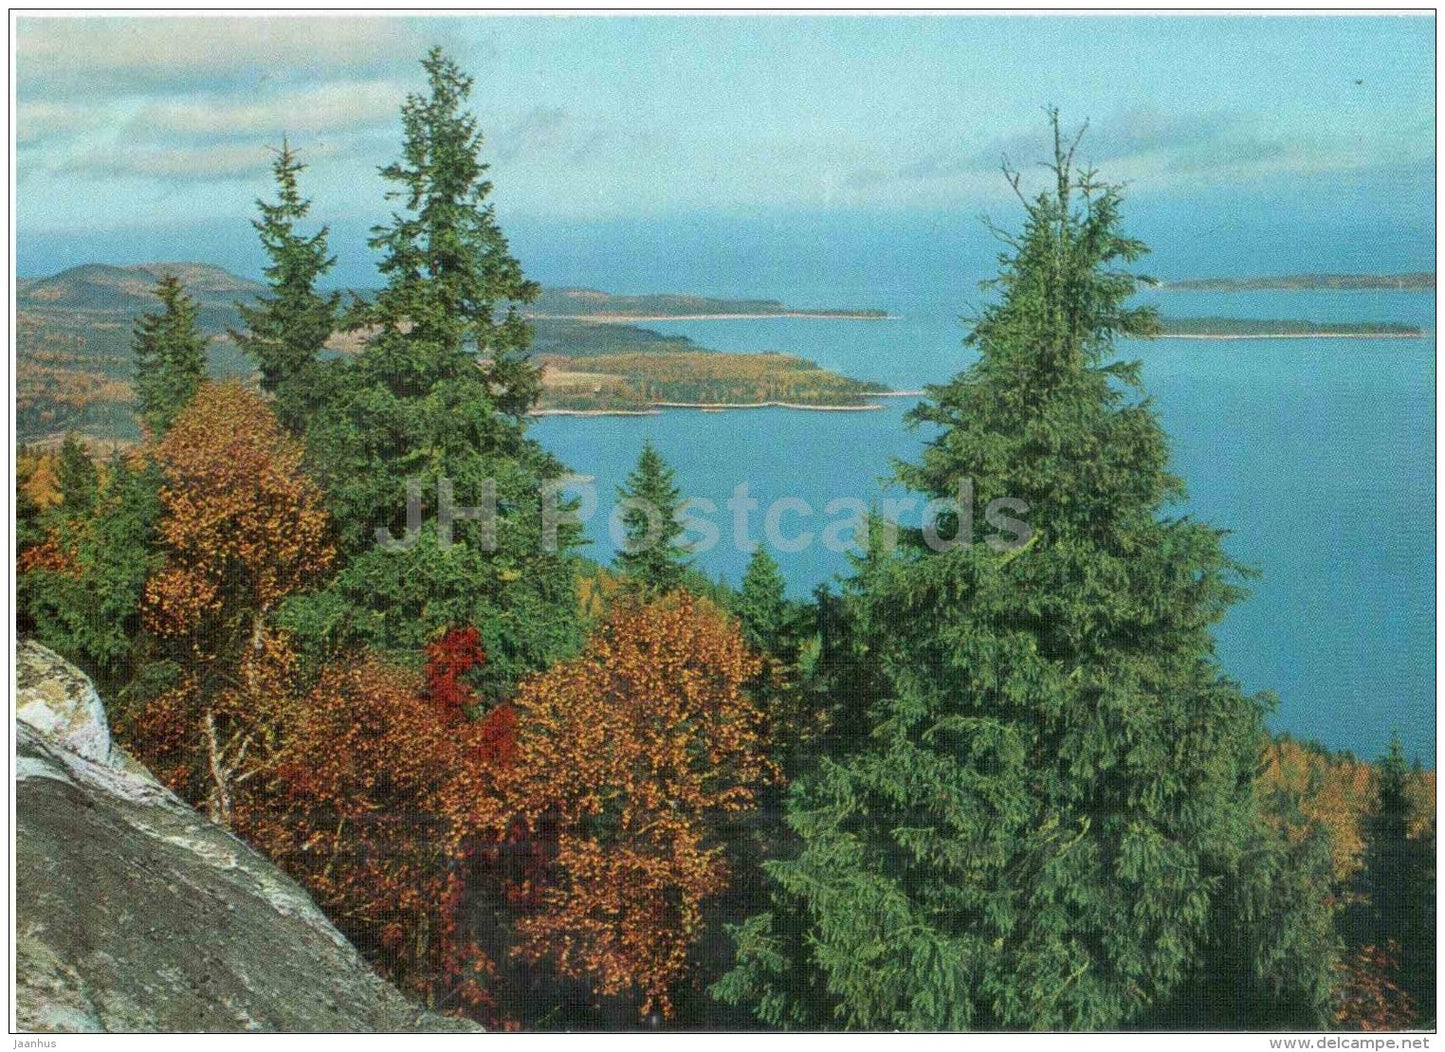 Koli - Suomi - 1305 - Finland - unused - JH Postcards